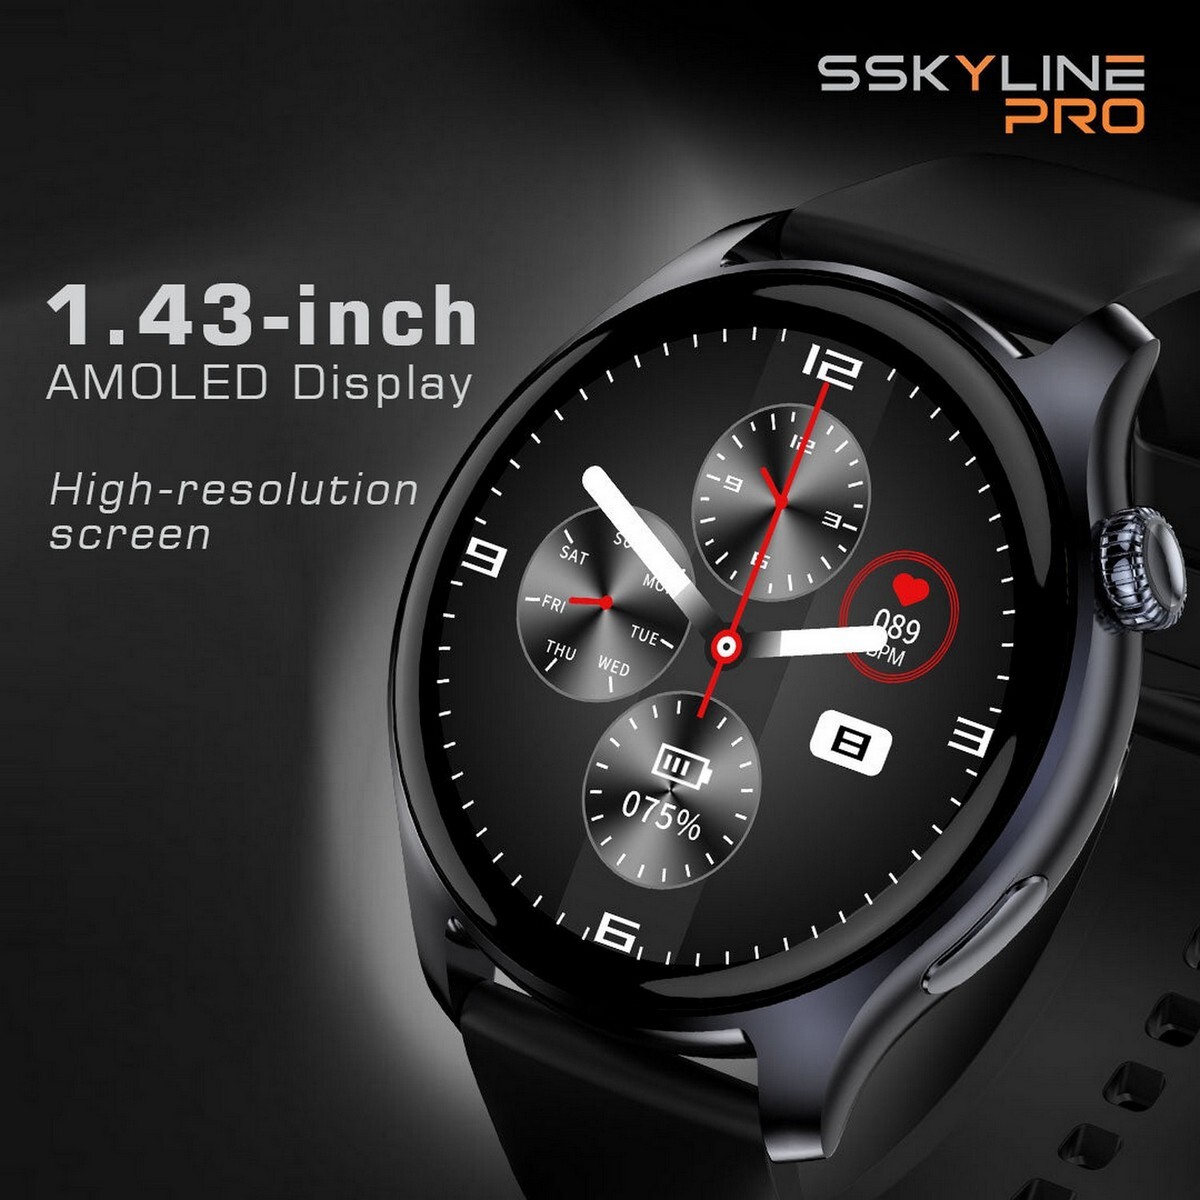 Just Corseca Smart Watch Sskyline Pro Black